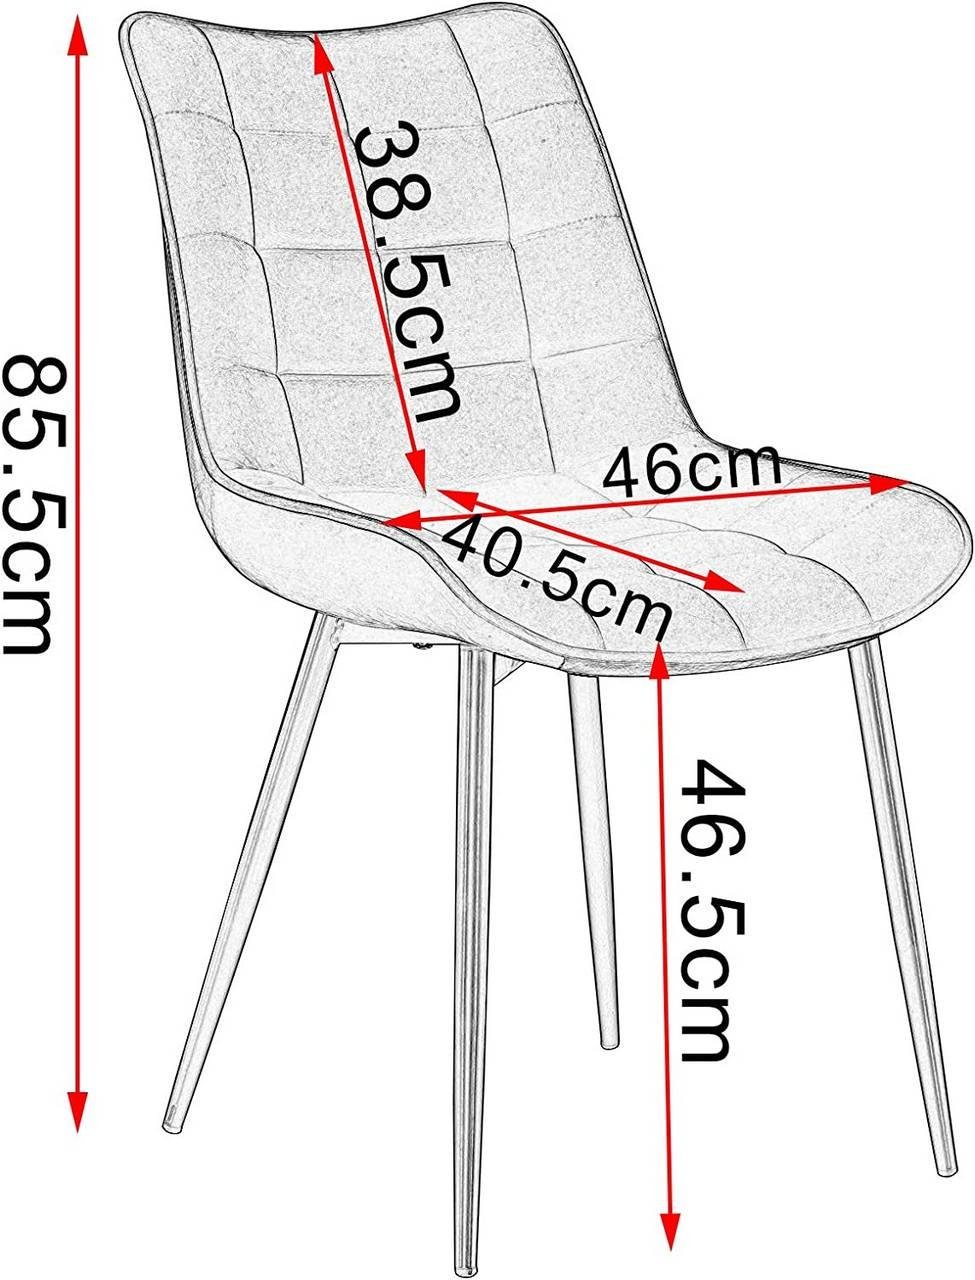 Design Woltu St), Küchenstuhl Polsterstuhl Stuhl, aus Samt (6 4-Fußstuhl